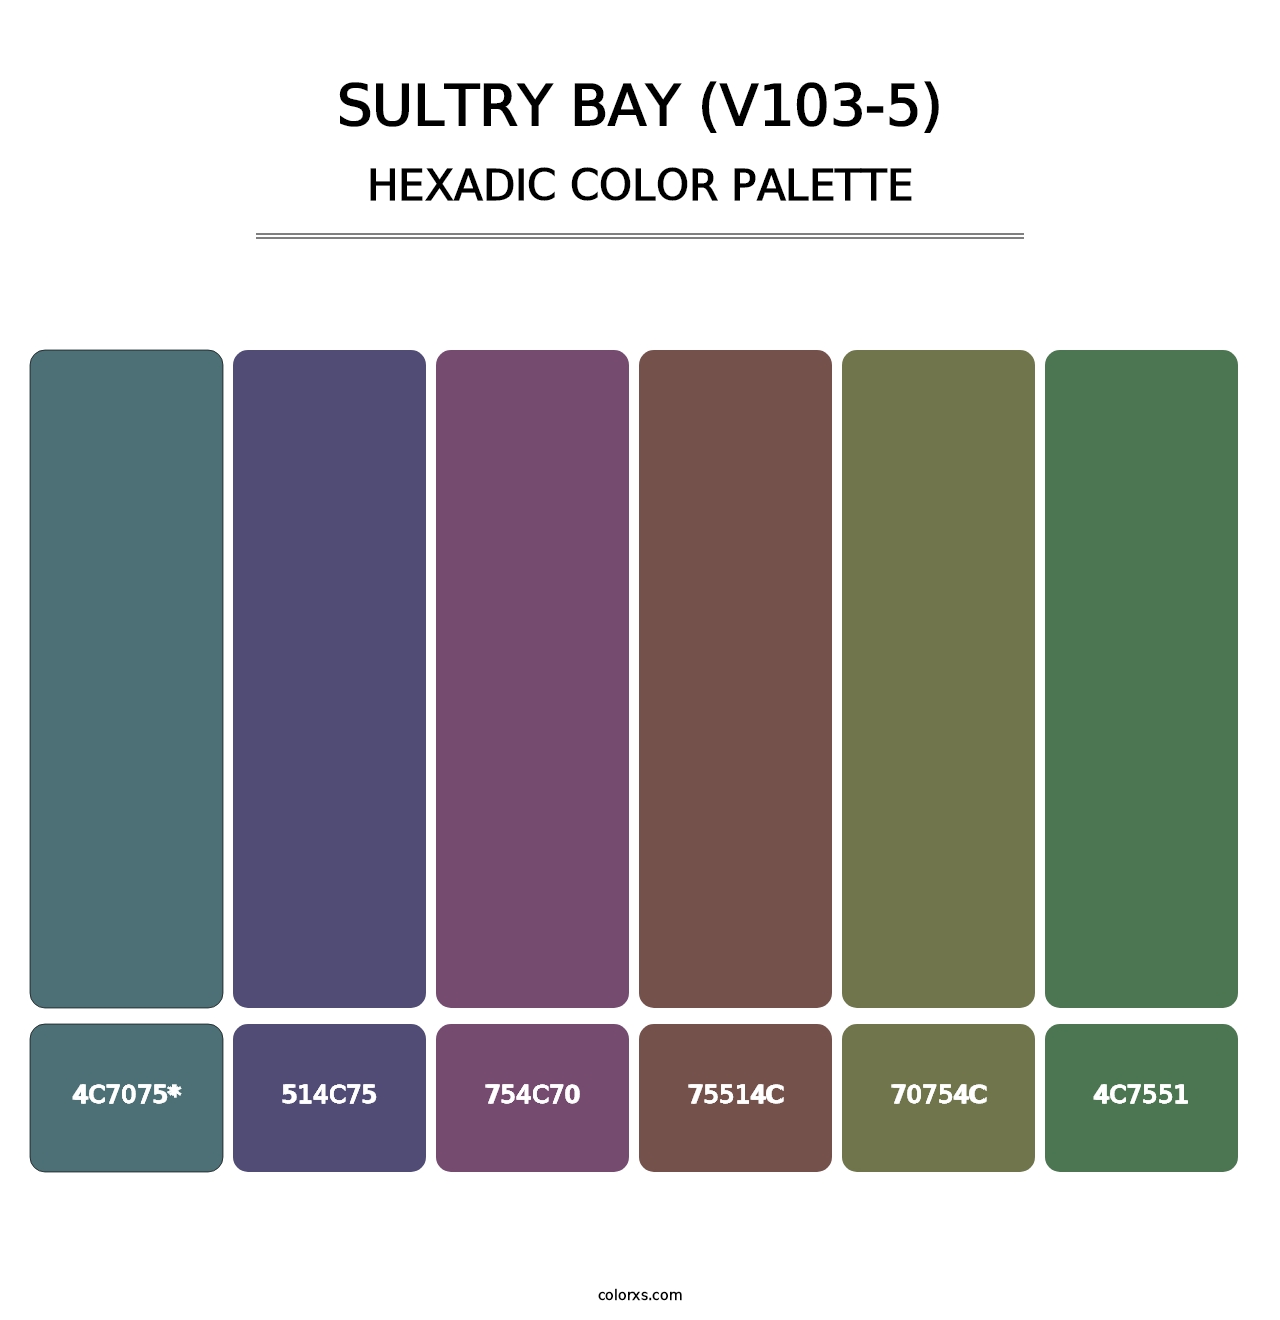 Sultry Bay (V103-5) - Hexadic Color Palette